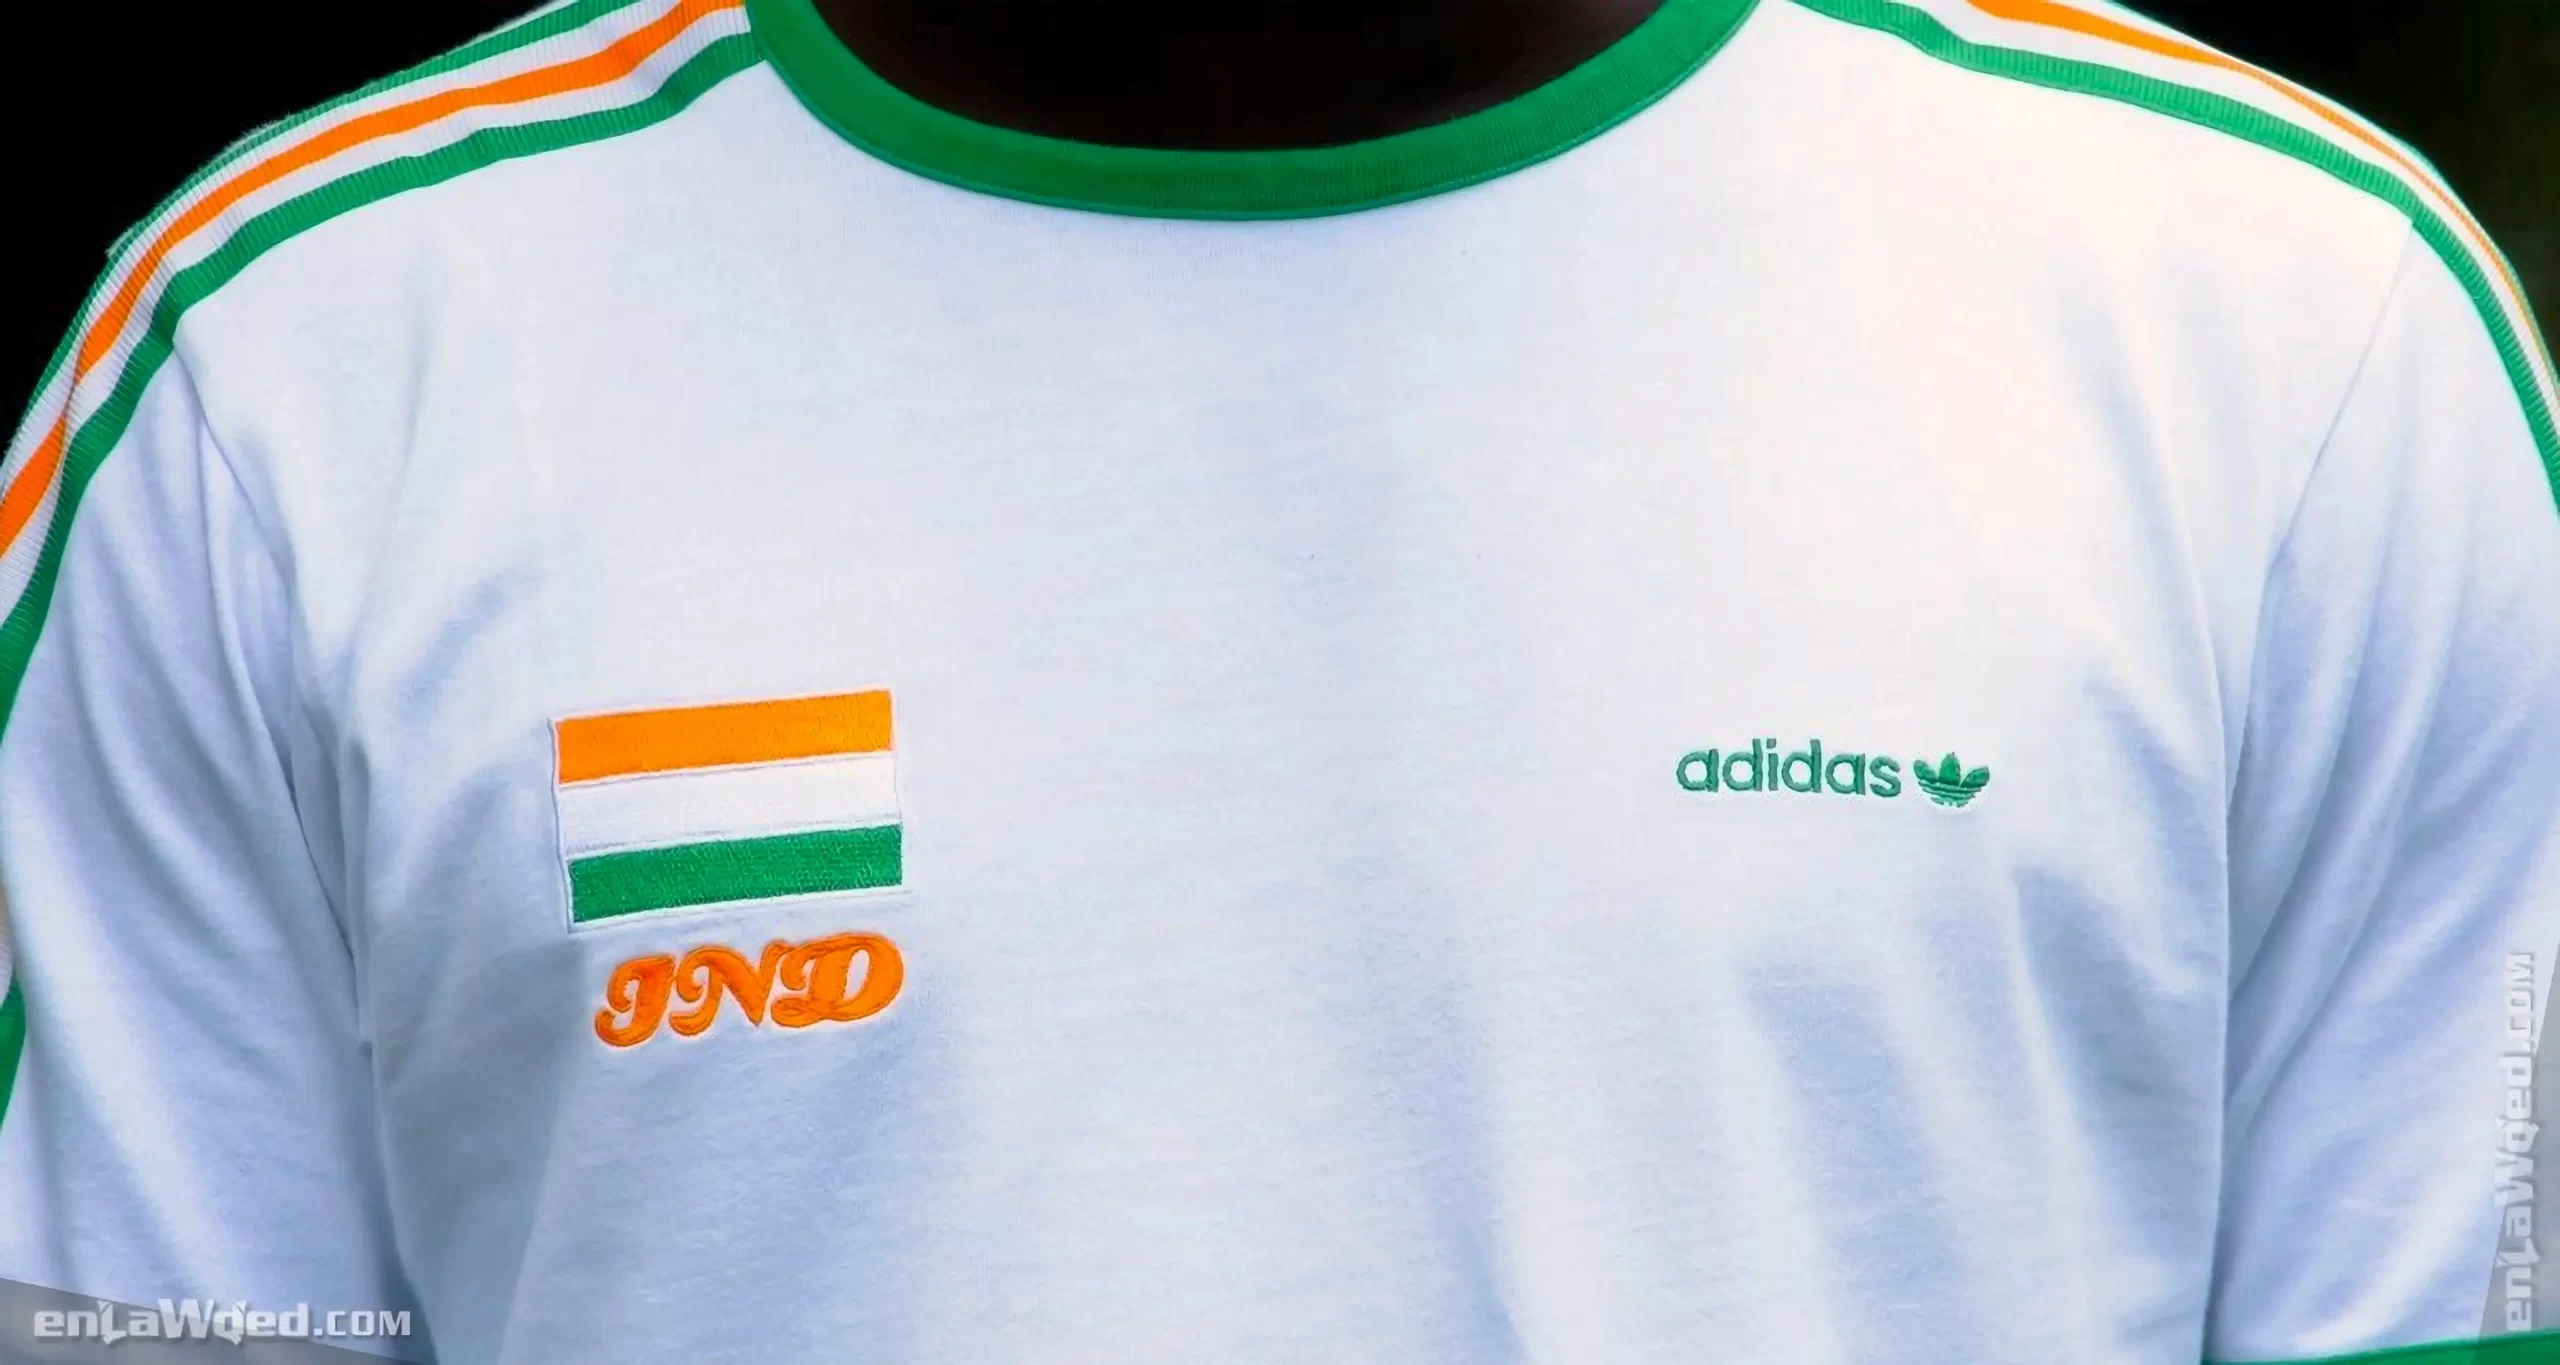 Men’s 2005 India T-Shirt by Adidas Originals: Proven (EnLawded.com file #lmcfvwctfwqxdza7iuh)